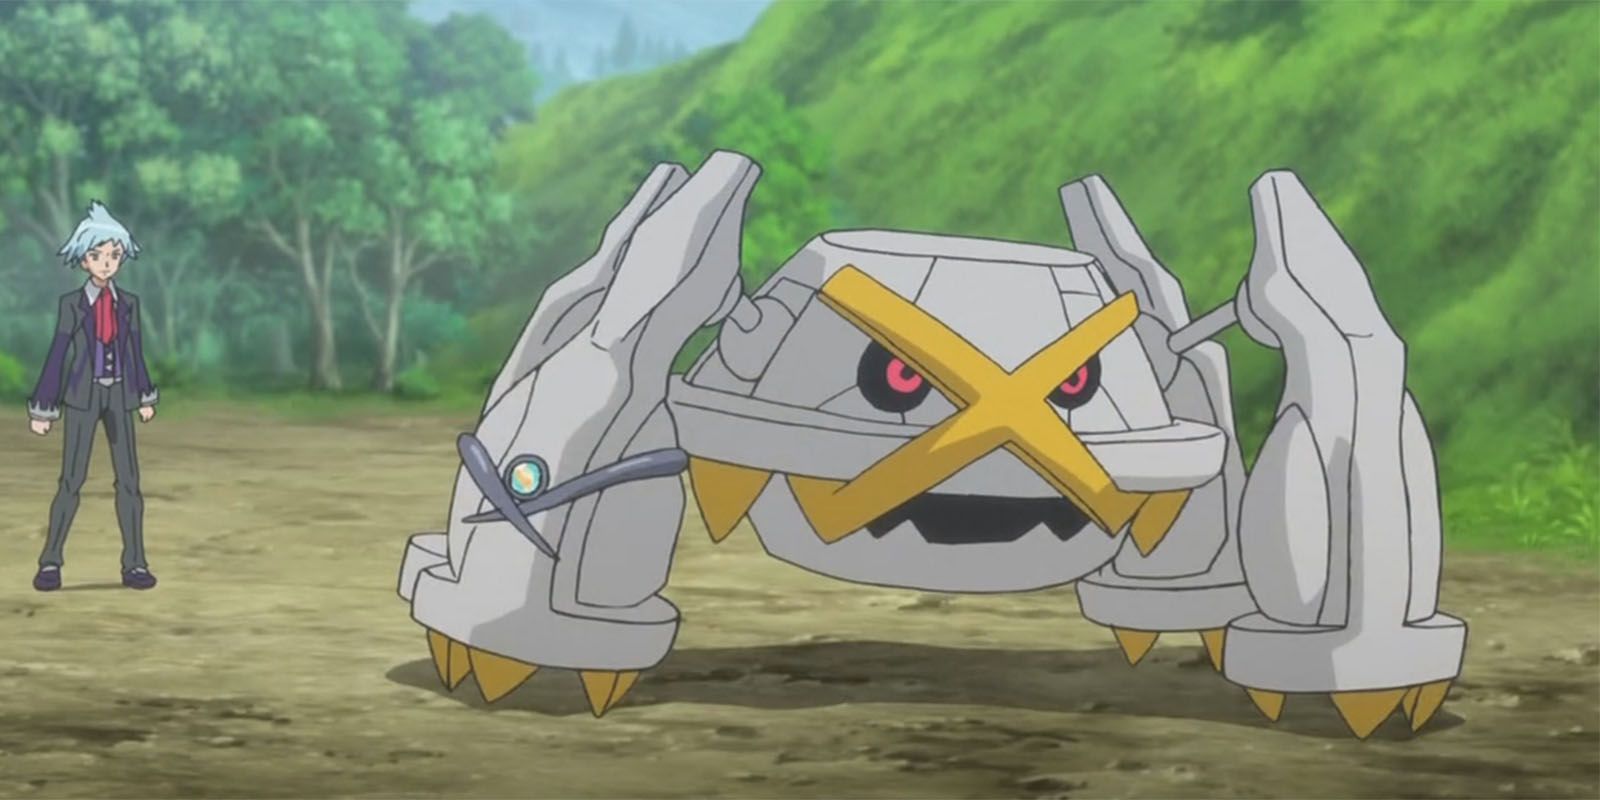 Pokemon Anime Shiny Metagross standing in front of its trainer, Steven.